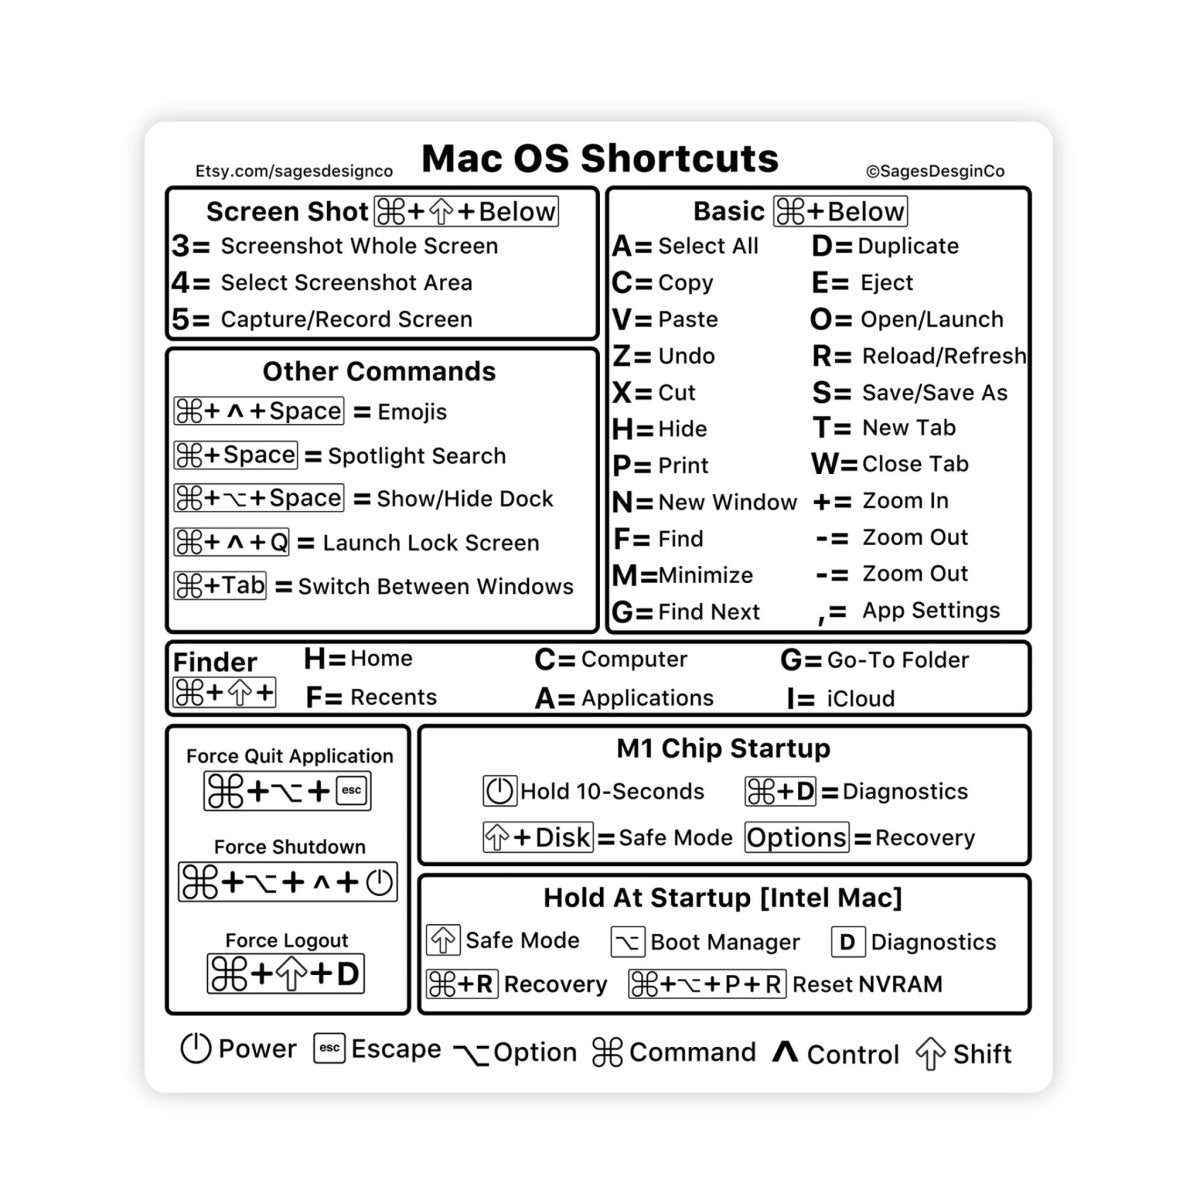 [M1/M2/Intel] Pink Mac OS Shortcut Sticker [Works With All Mac Laptops] - stickerbull[M1/M2/Intel] Pink Mac OS Shortcut Sticker [Works With All Mac Laptops]Retail StickerstickerbullstickerbullTaylor_WhiteMac [#78]White[M1/M2/Intel] Pink Mac OS Shortcut Sticker [Works With All Mac Laptops]